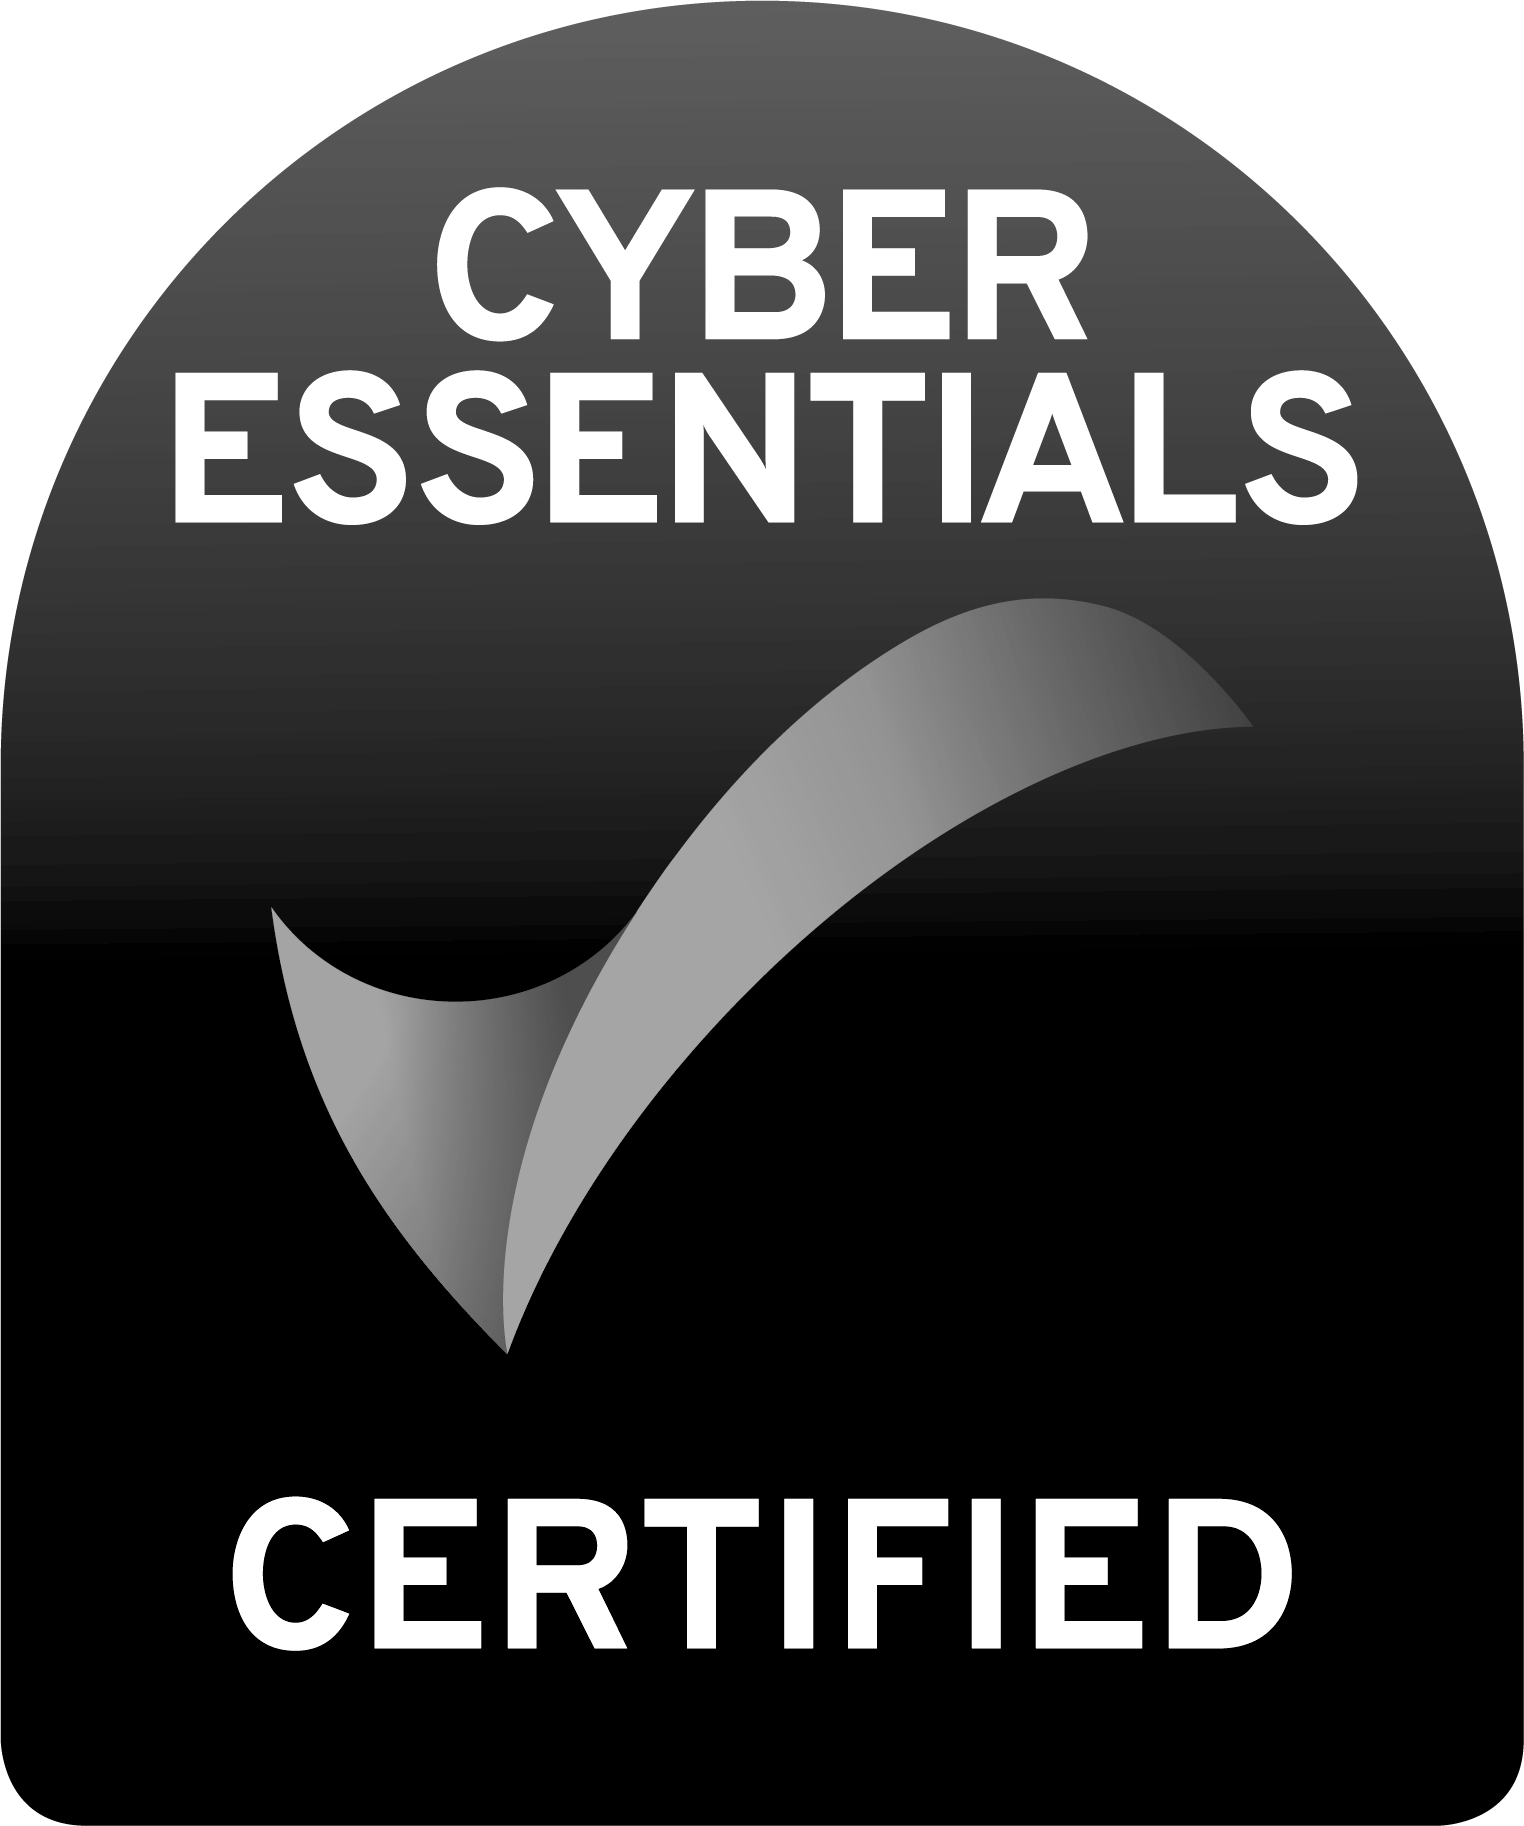 Cyberessentials Certificate